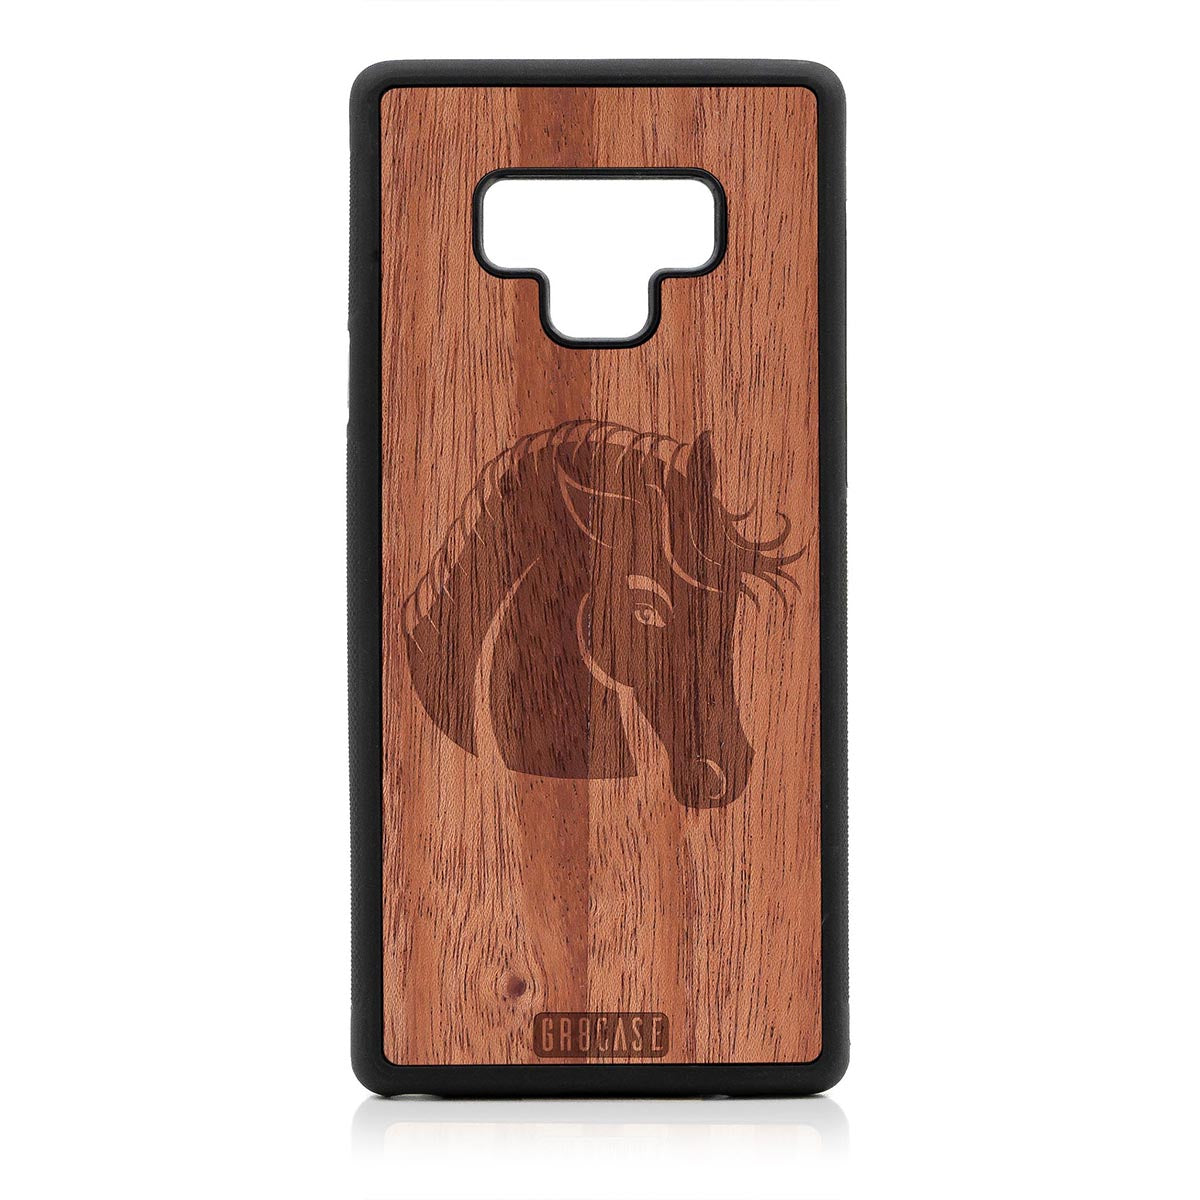 Horse Design Wood Case Samsung Galaxy Note 9 by GR8CASE